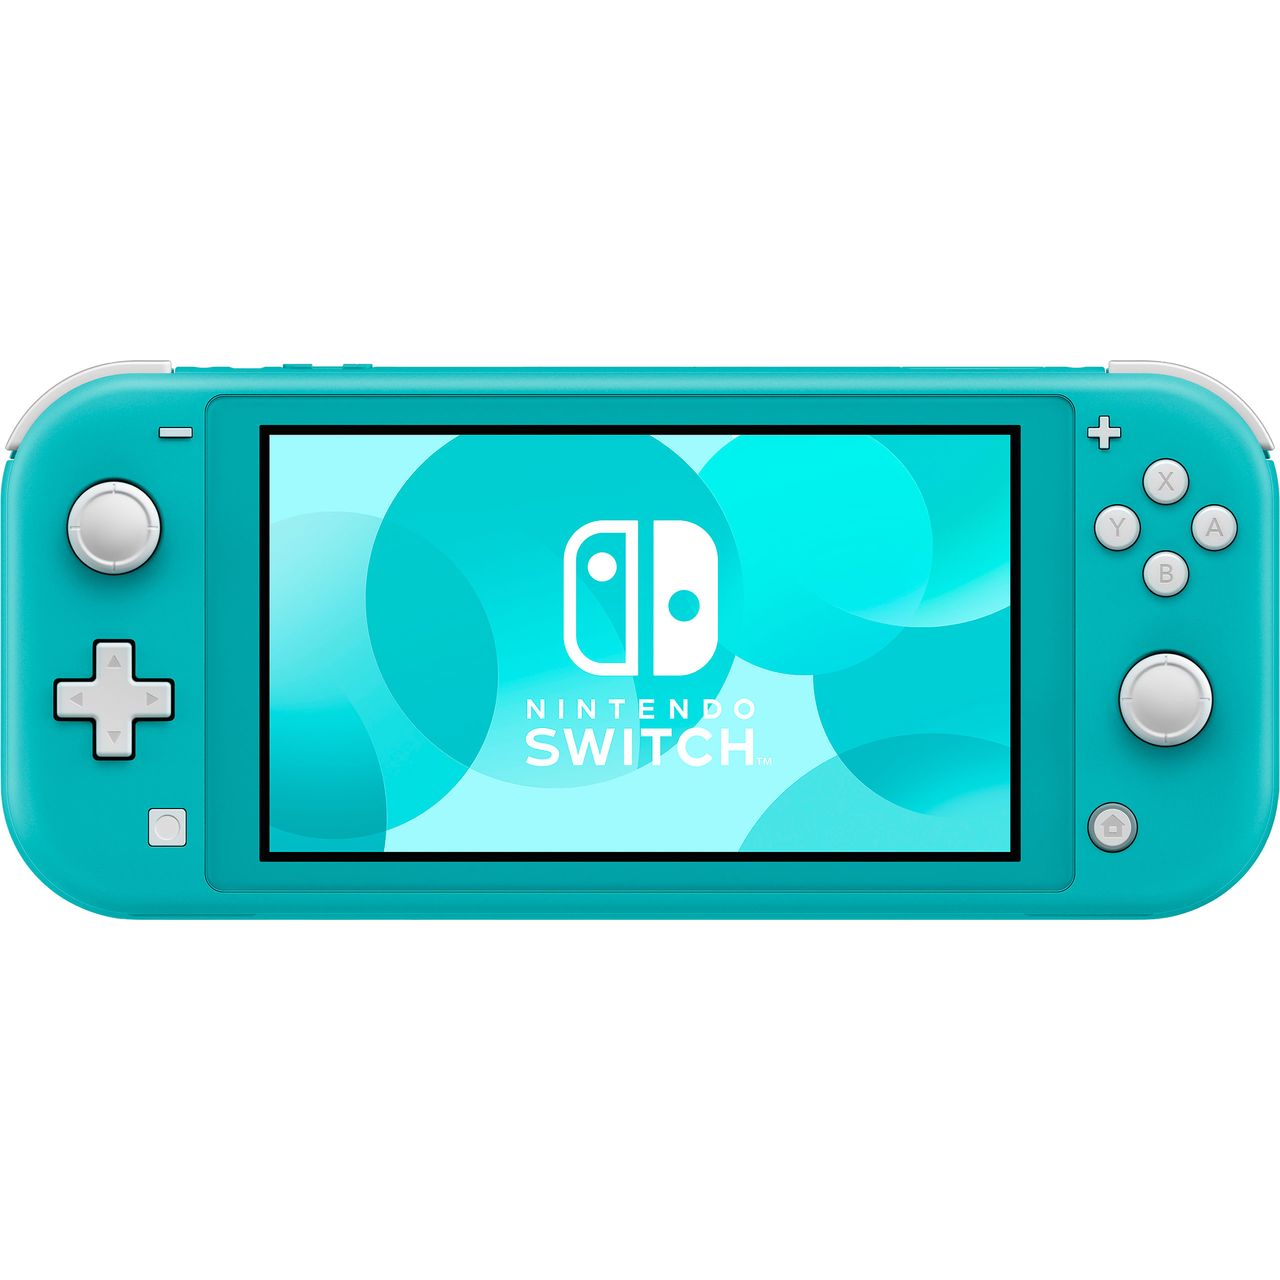 Nintendo Switch Lite 32GB Review